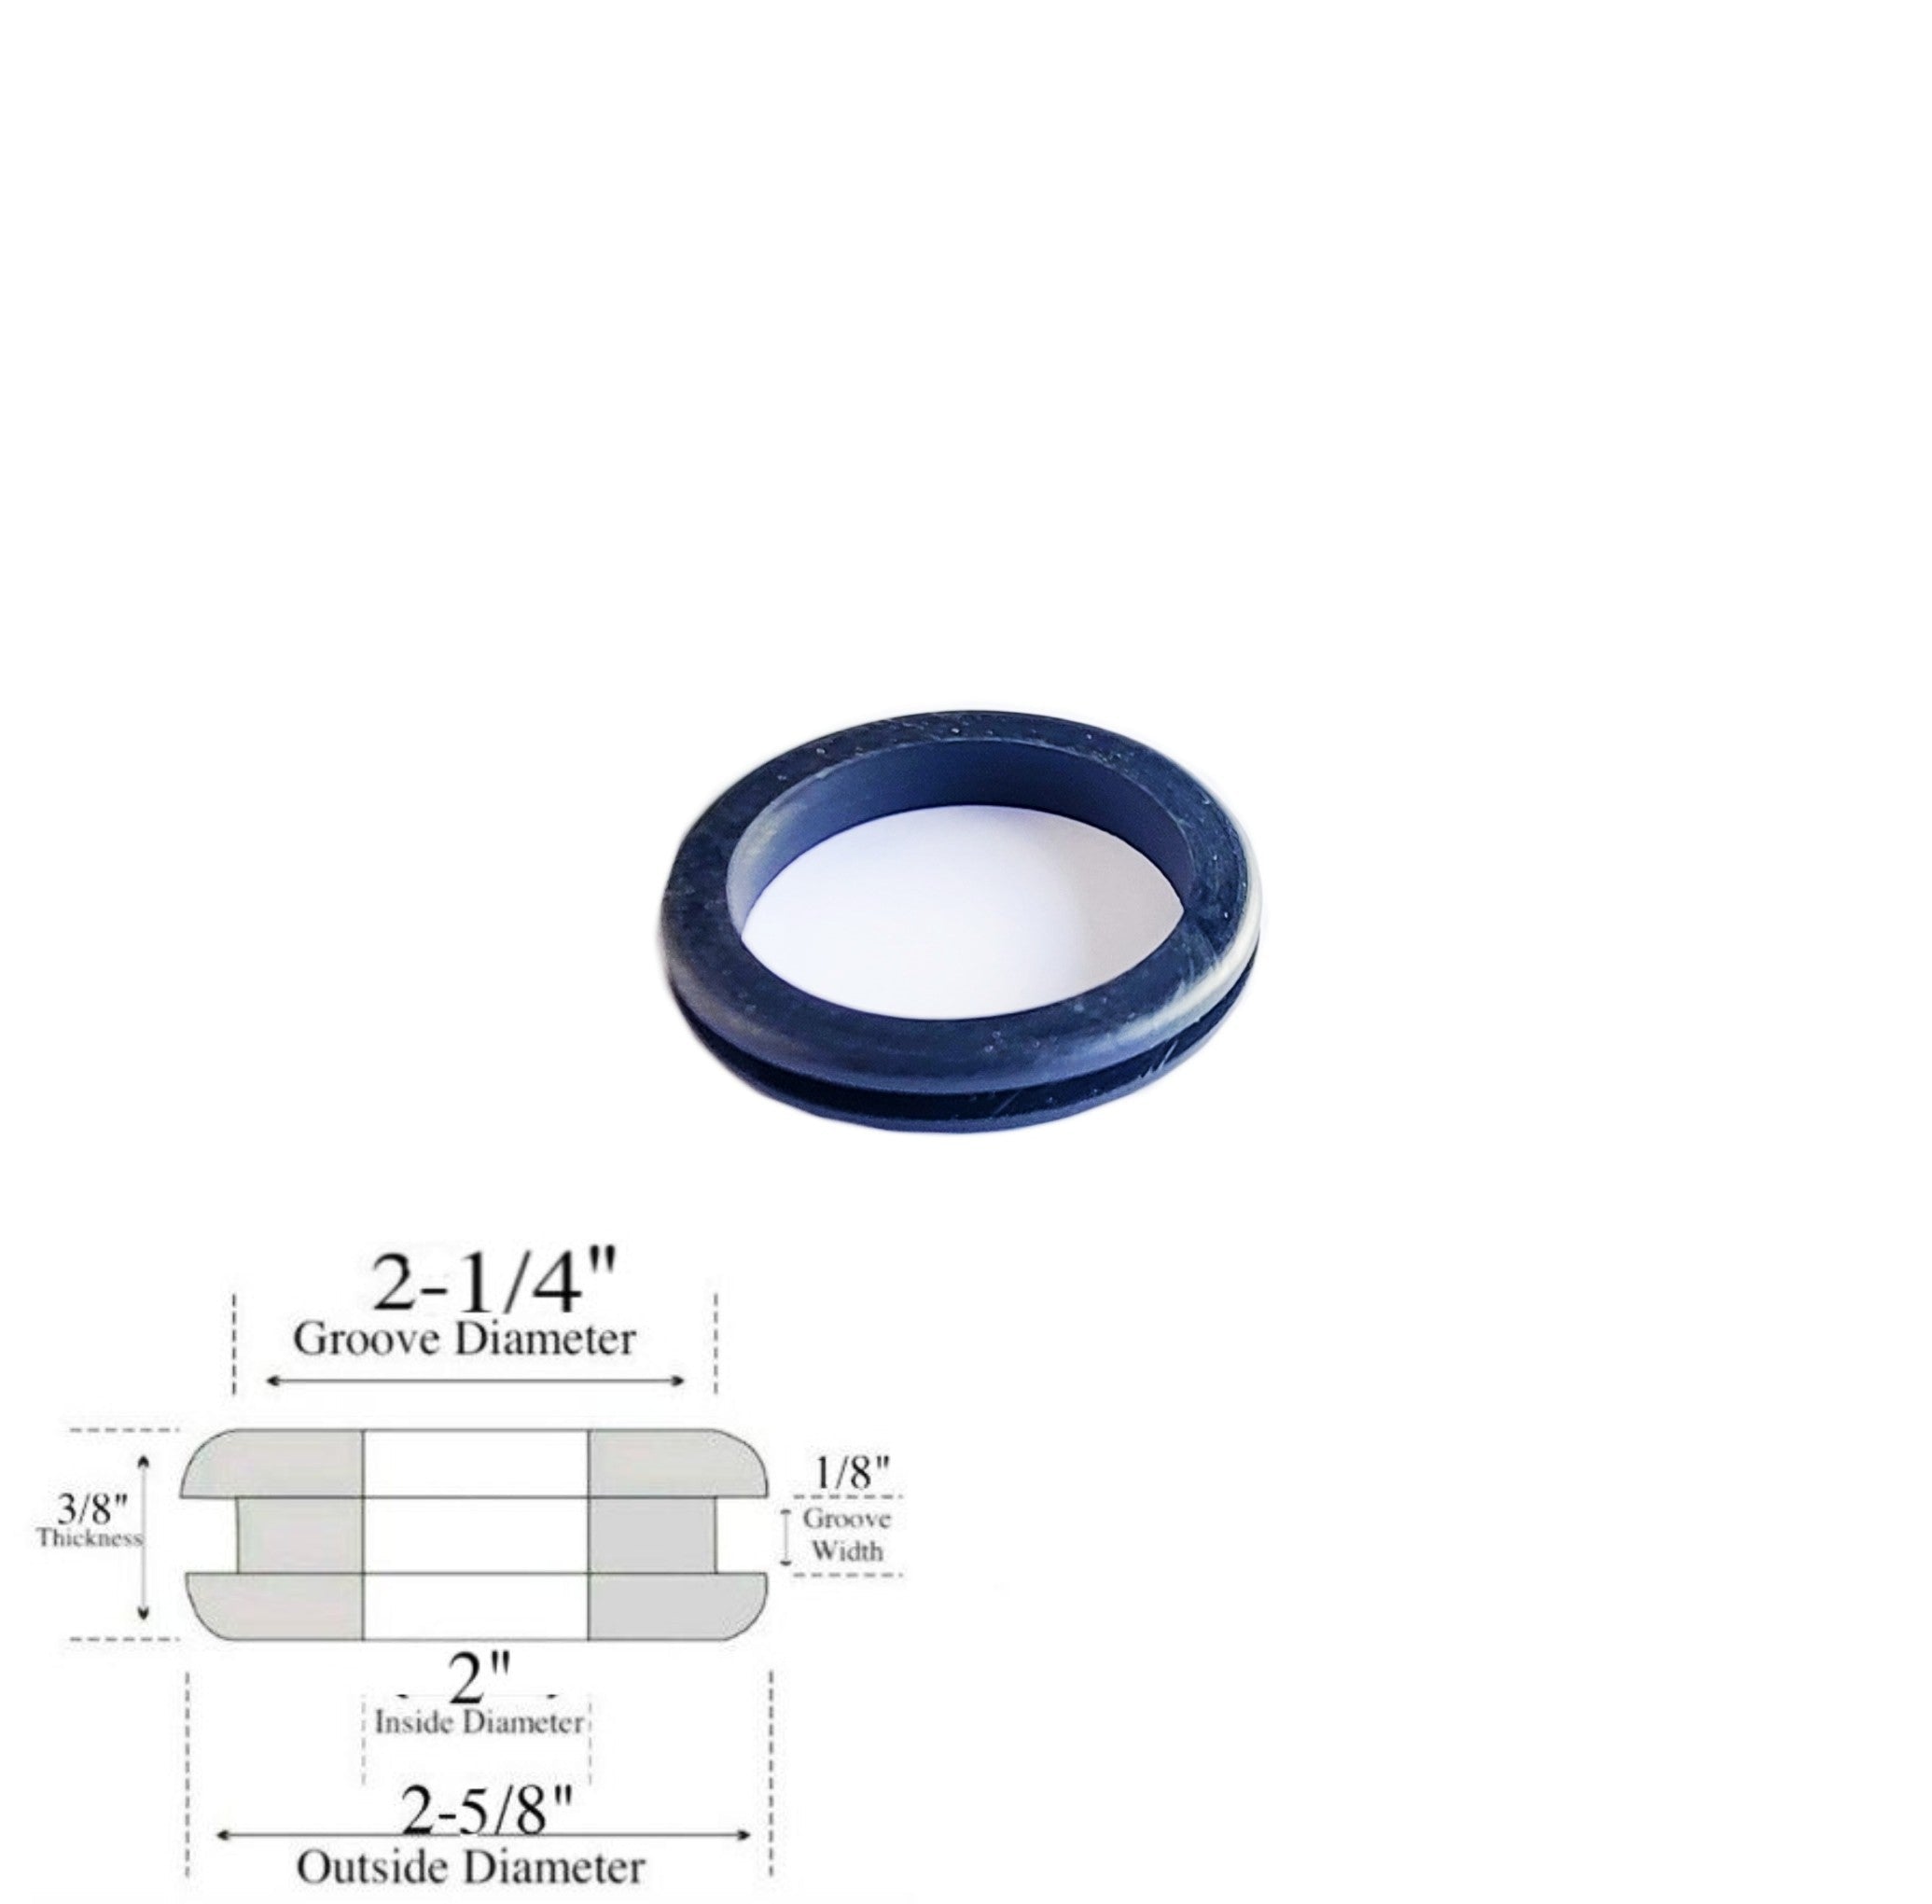 2 Inside Diameter Rubber Grommet - 1/8 Groove Width - Fits 2-1/4 Holes